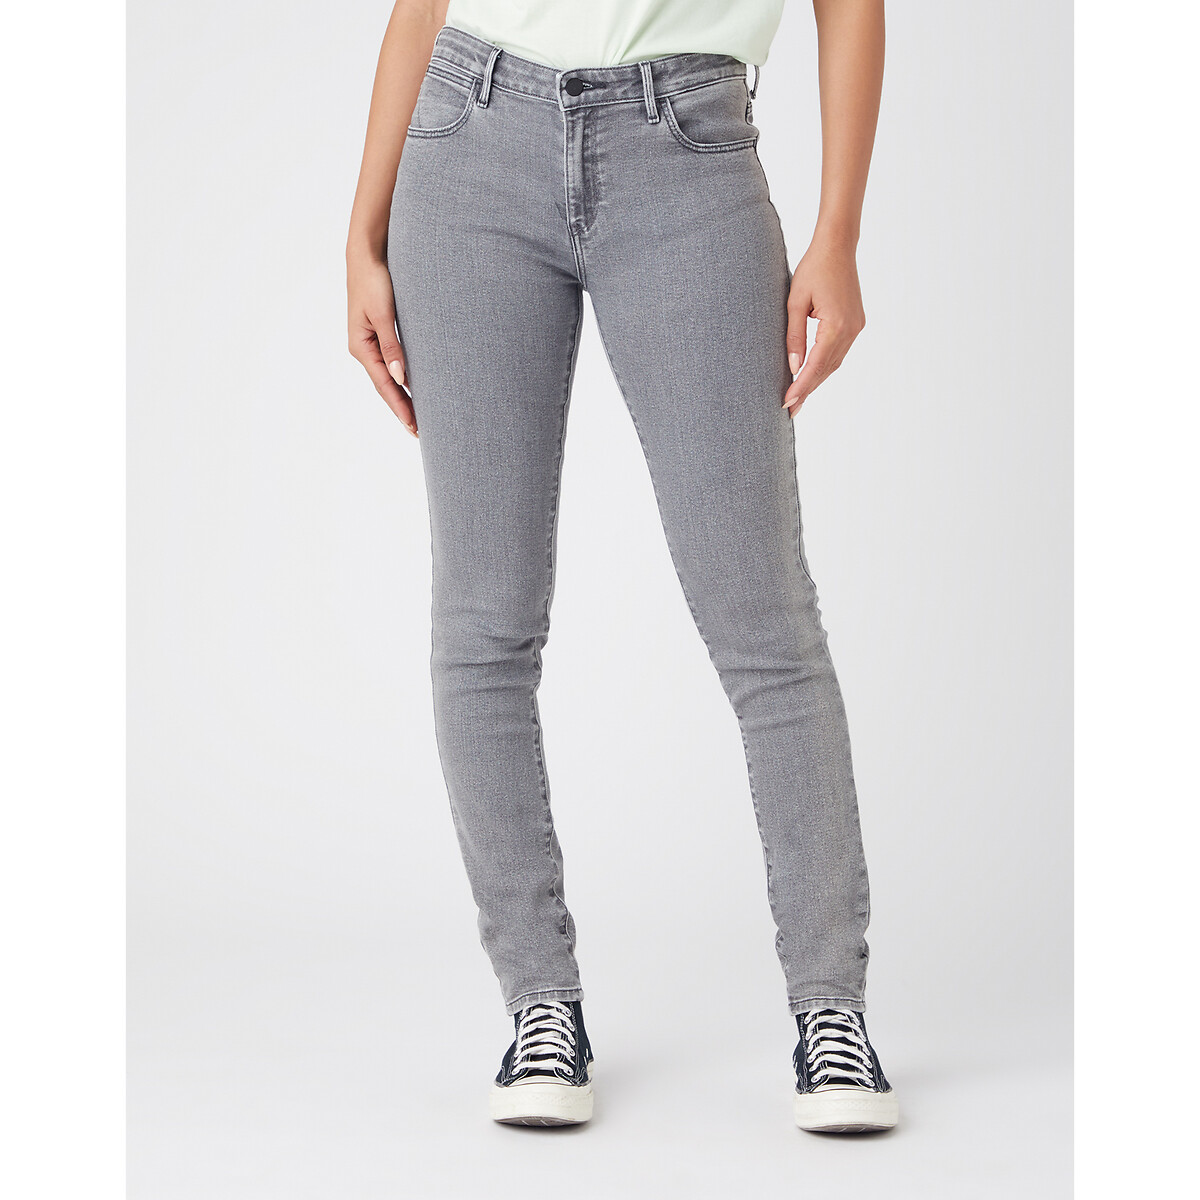 Wrangler Skinny jeans, standaard taille